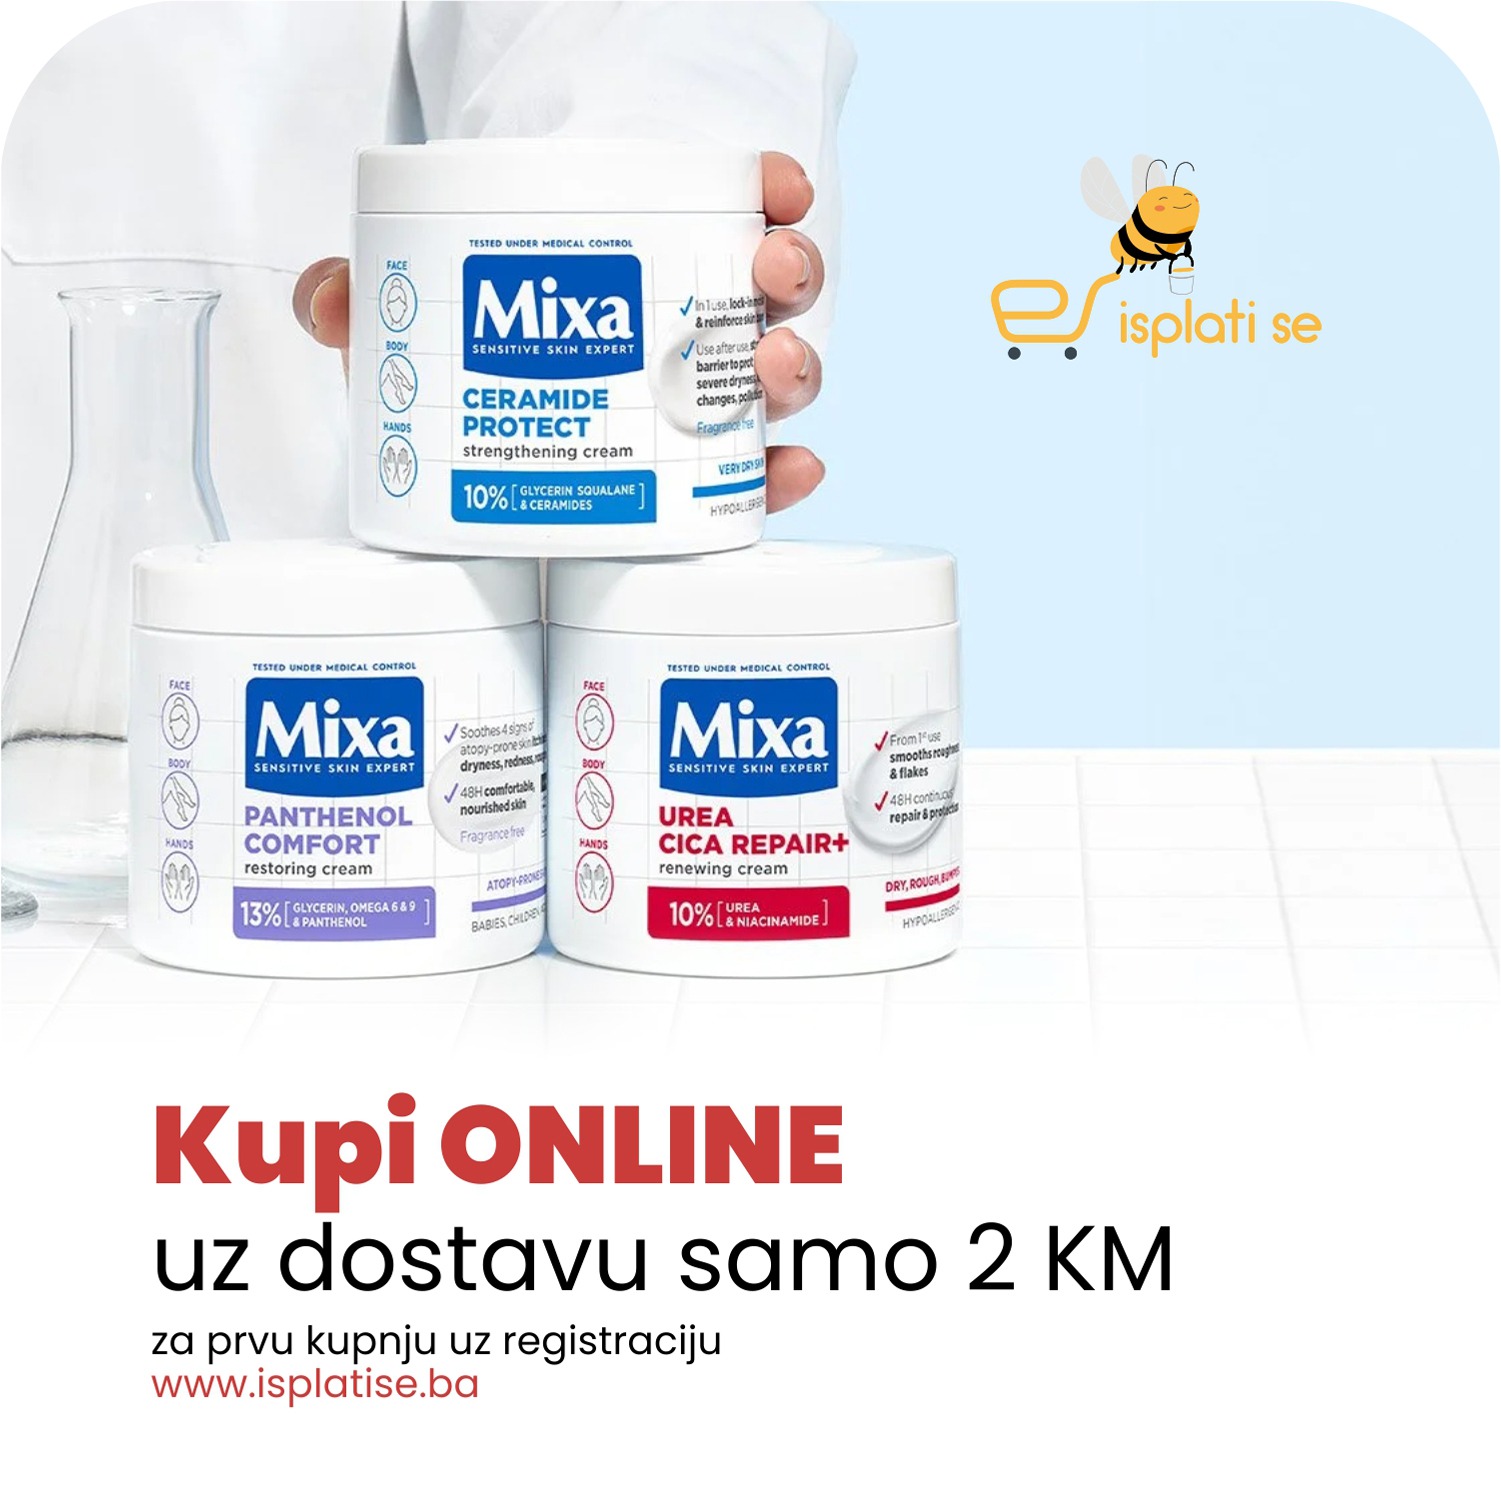 mixa-kupi-online-dostava-2km-isplatise-online-shop-2